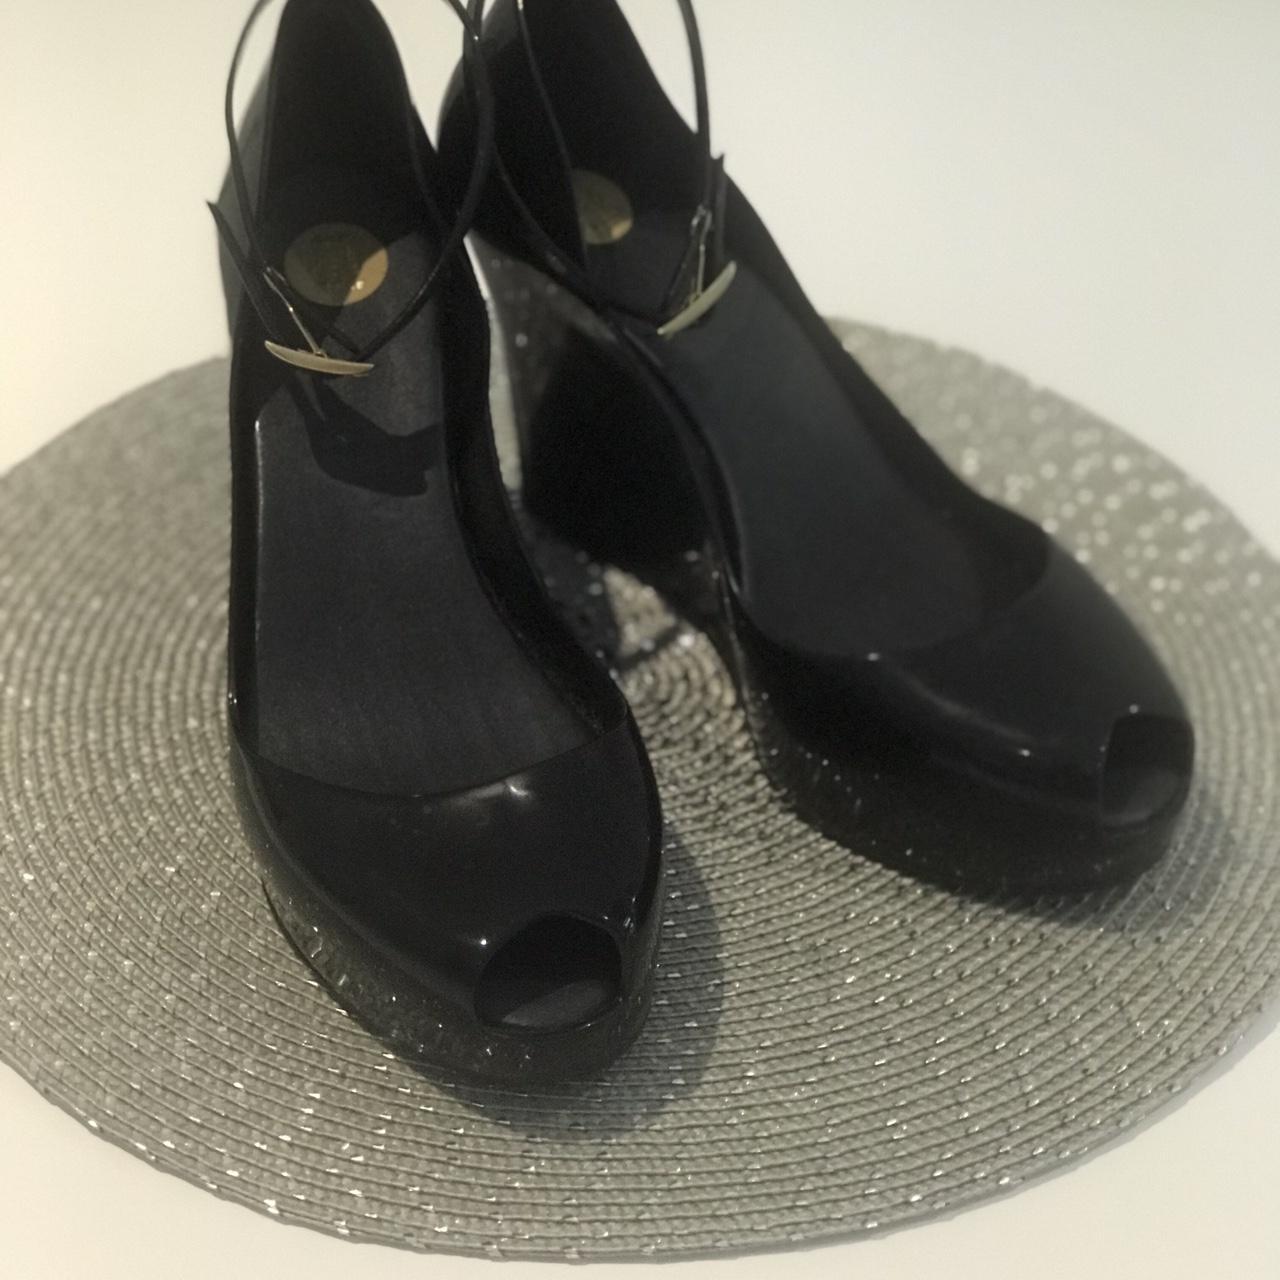 Melissa Patchuli III Platform shoes Black with gold... - Depop